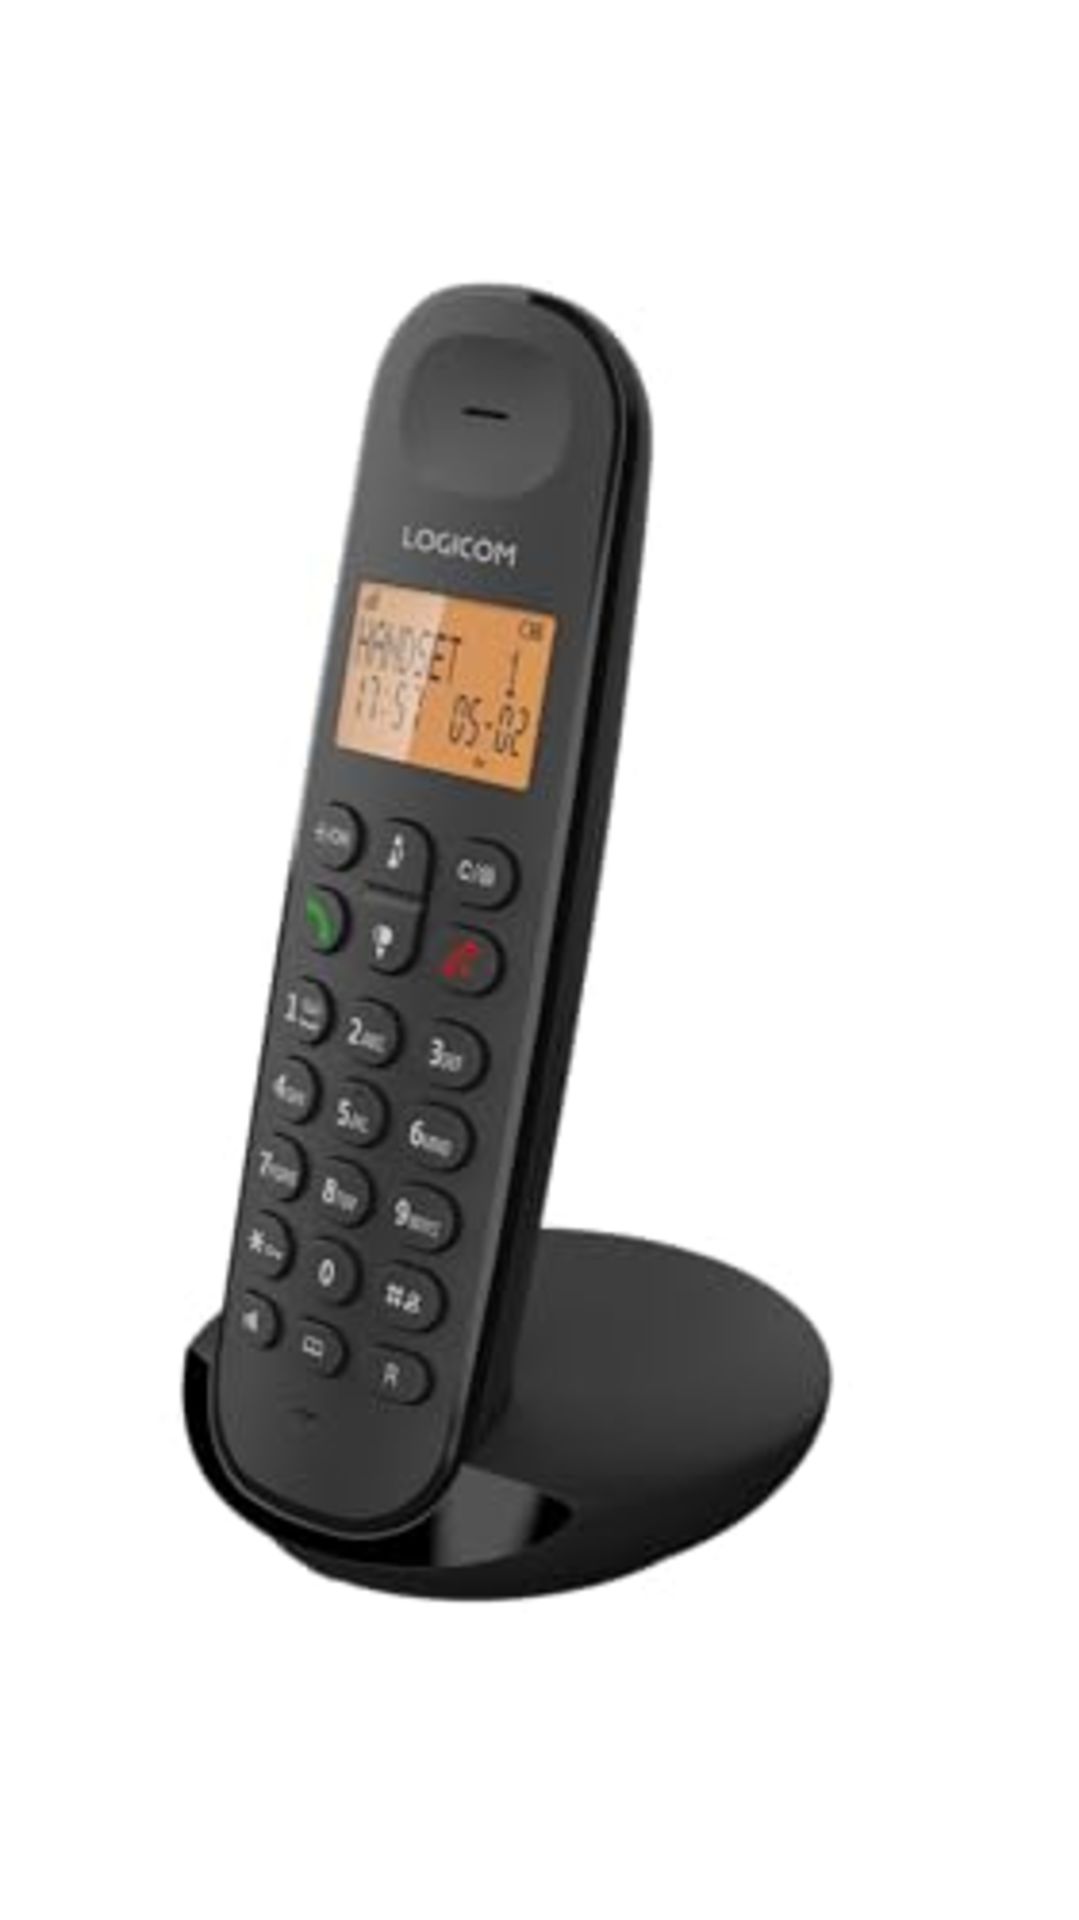 Logicom ILOA 150 Cordless Fixed Telephone without Answering Machine - Solo - Analog an